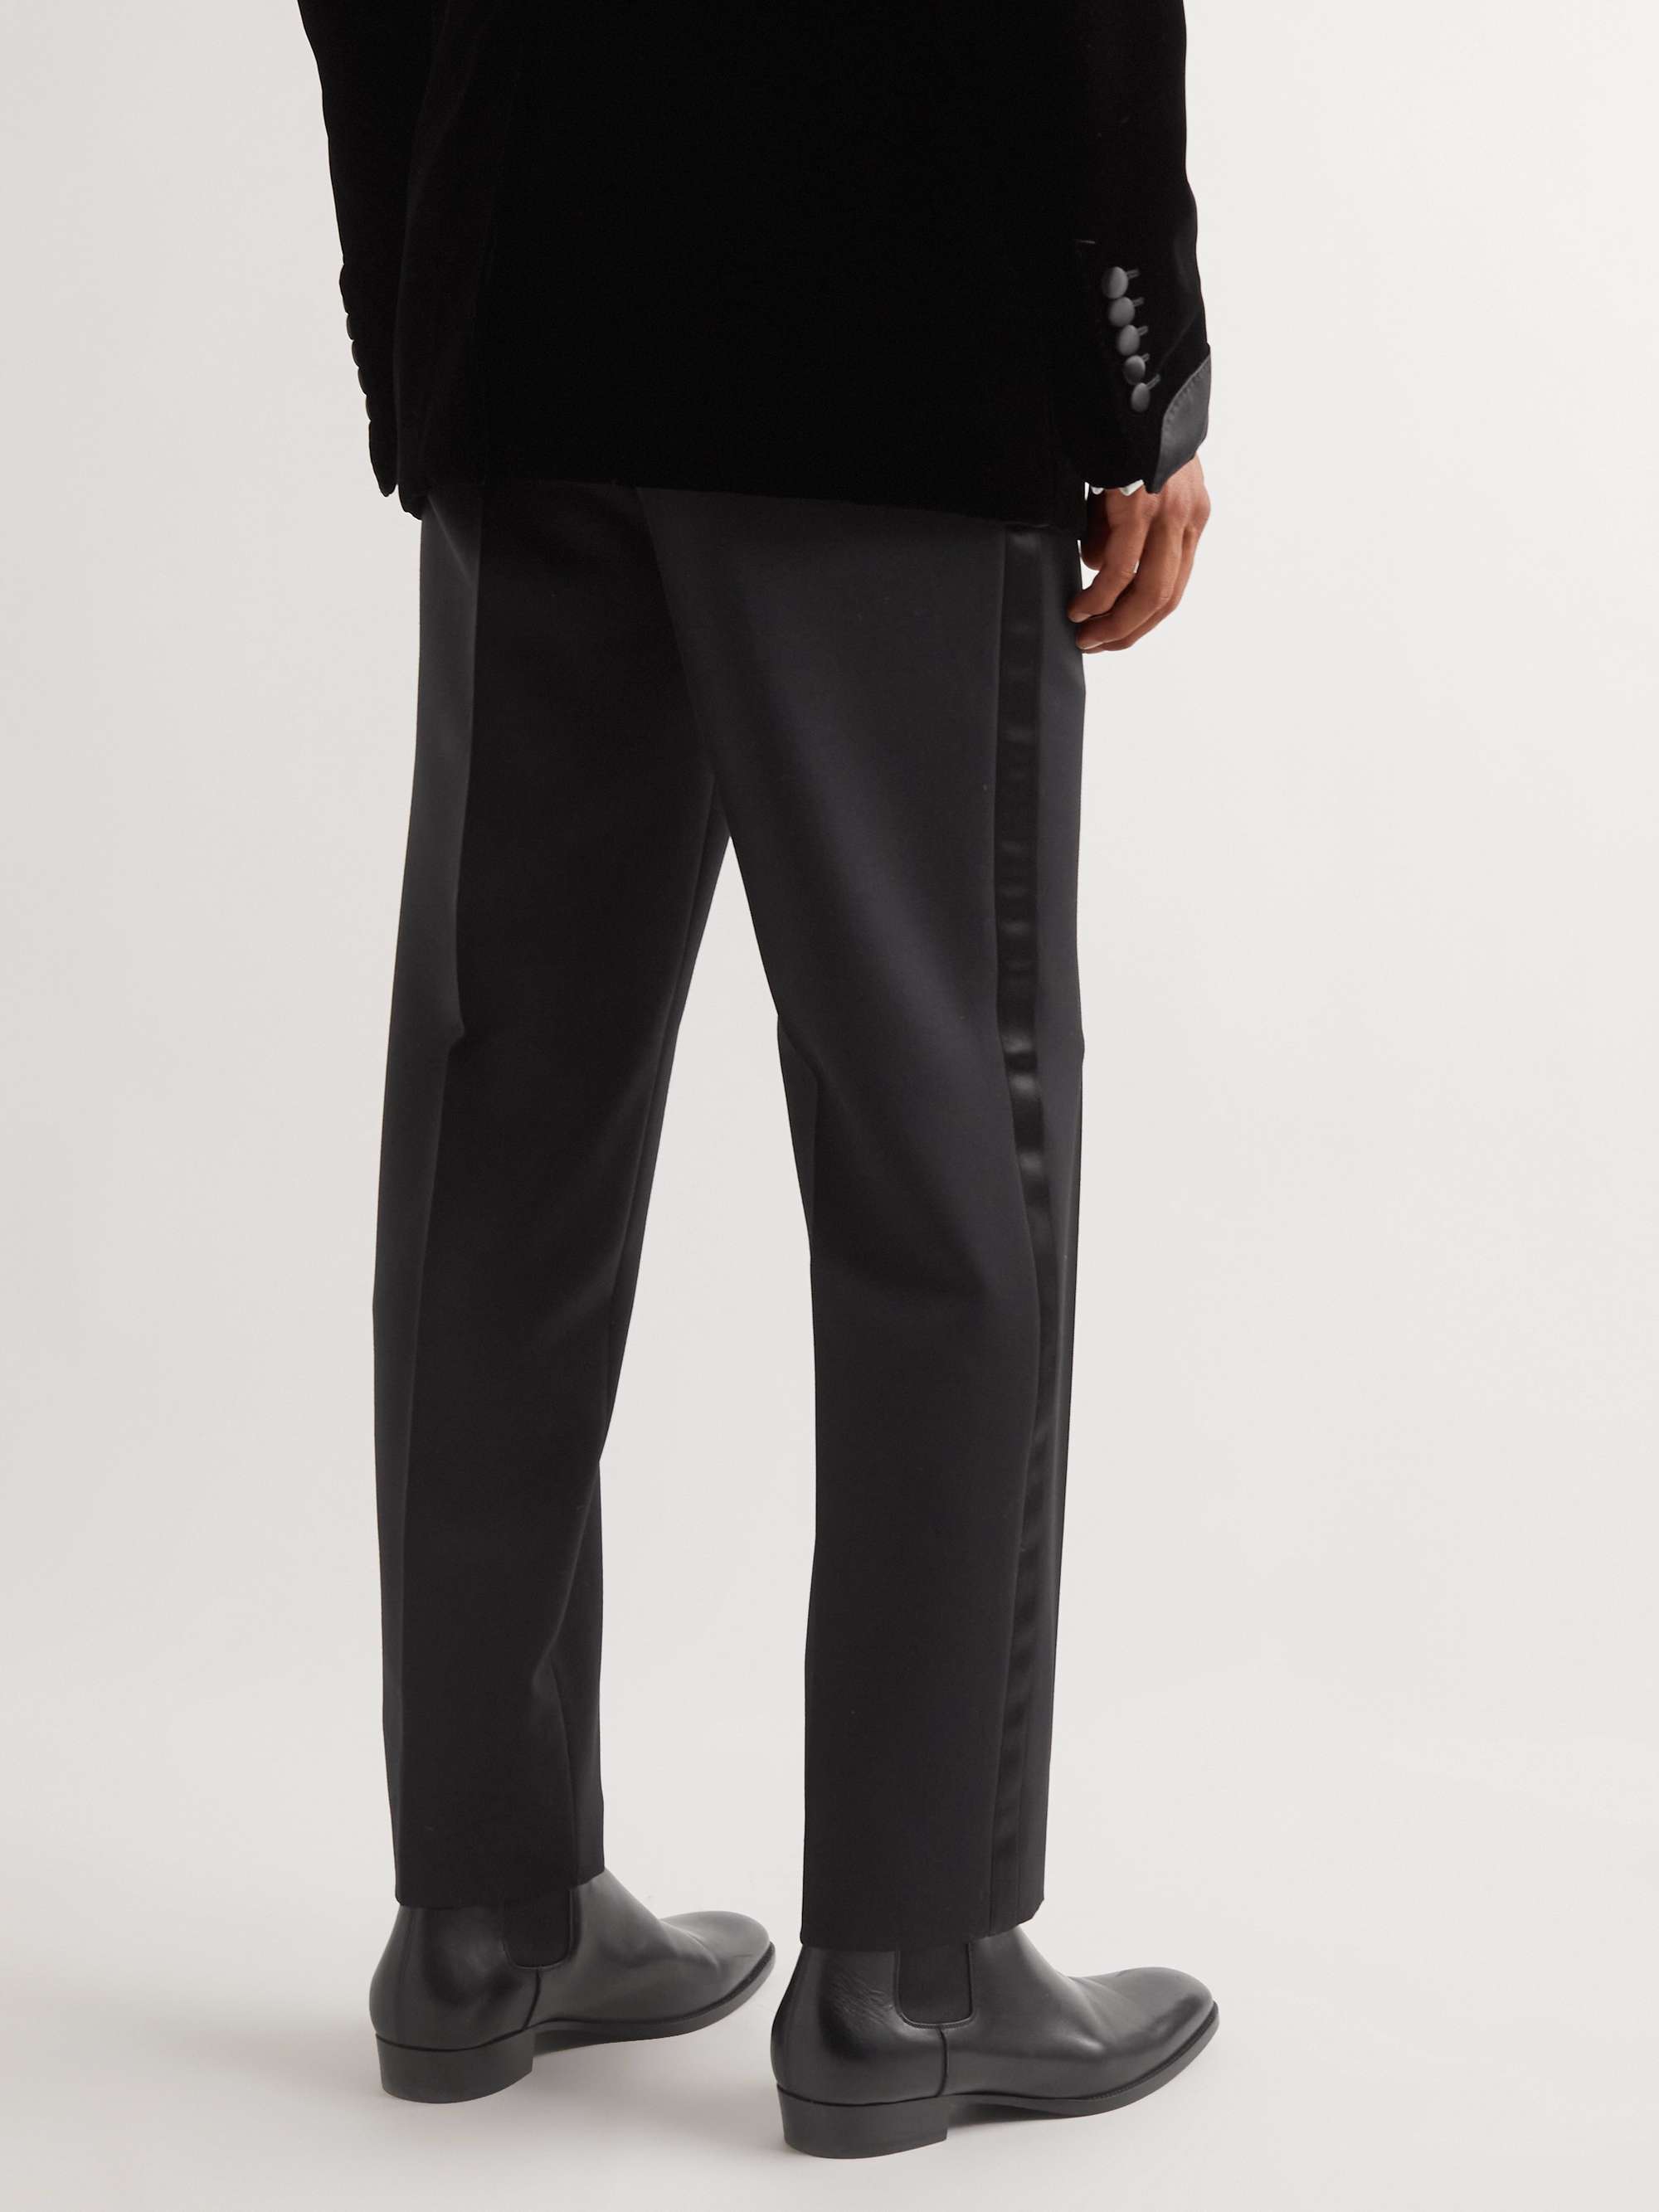 TOM FORD Straight-Leg Grain de Poudre Wool and Mohair-Blend Tuxedo Trousers